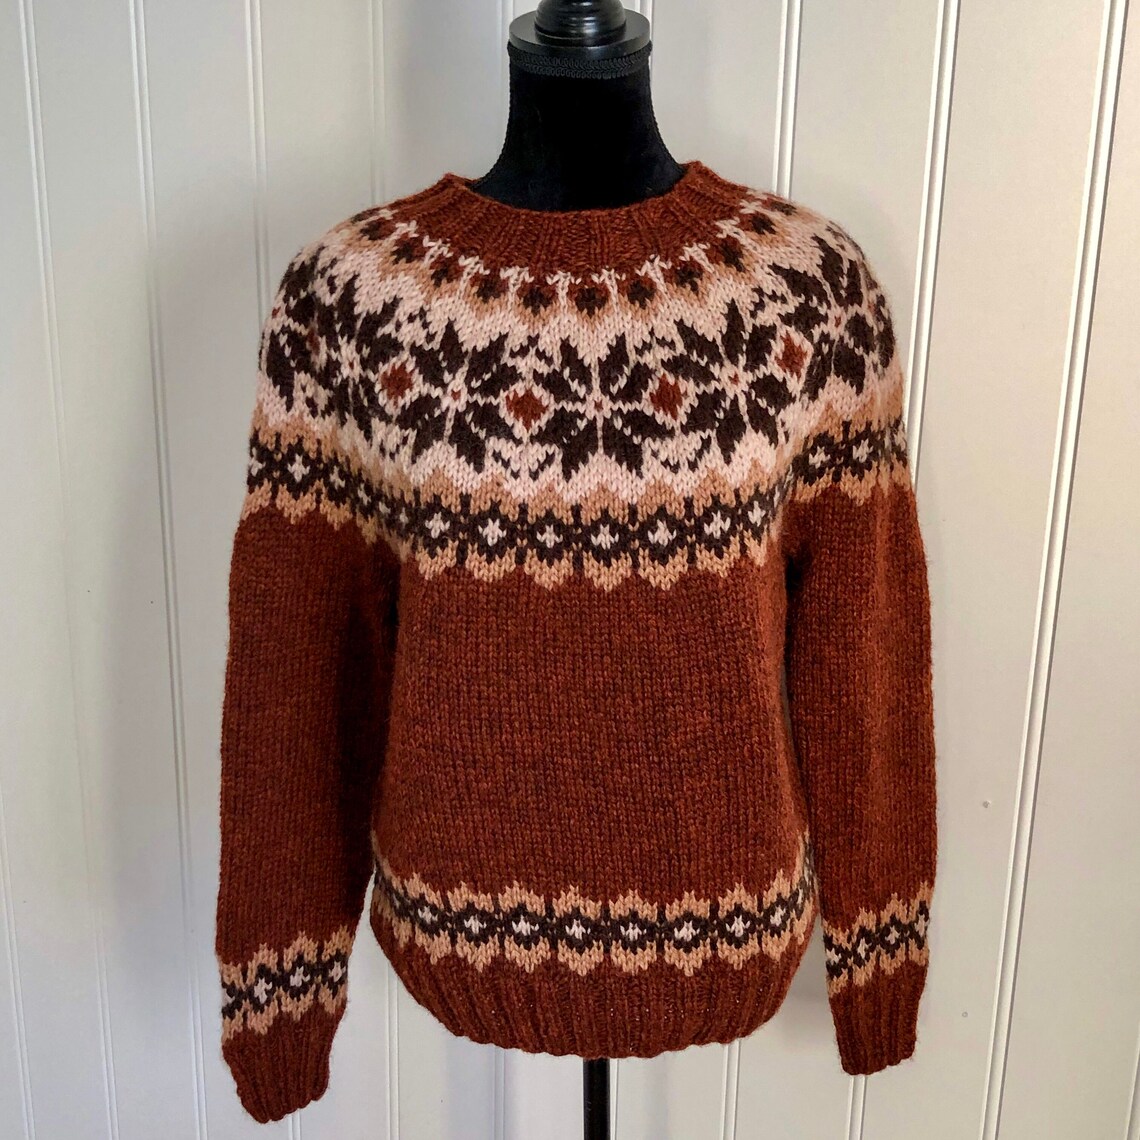 SKANDIQ Sweater Digital Pattern for Knitters English and - Etsy